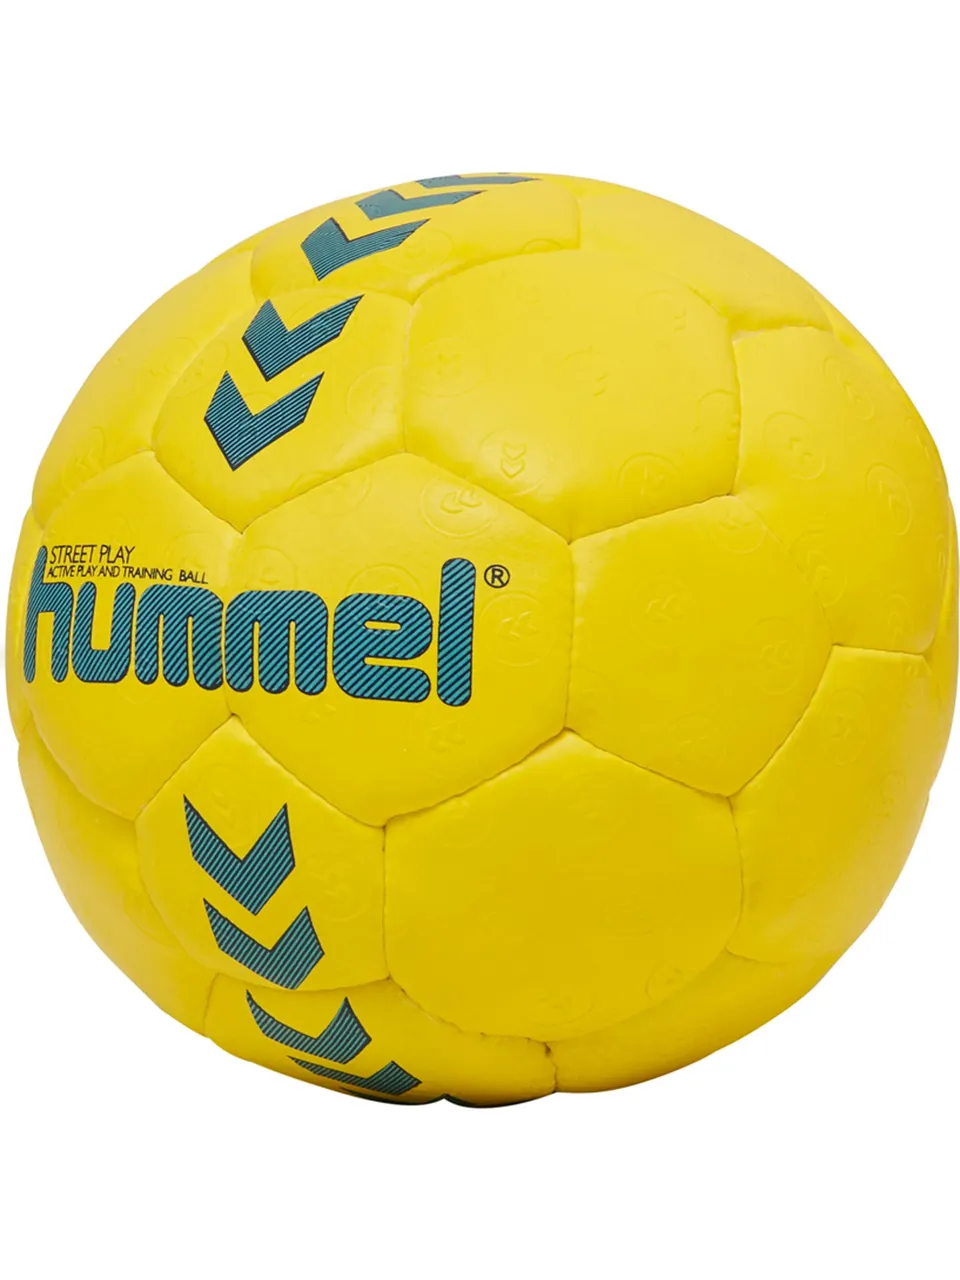 hummel Hmtreet Play Unisex Erwachsene Handball